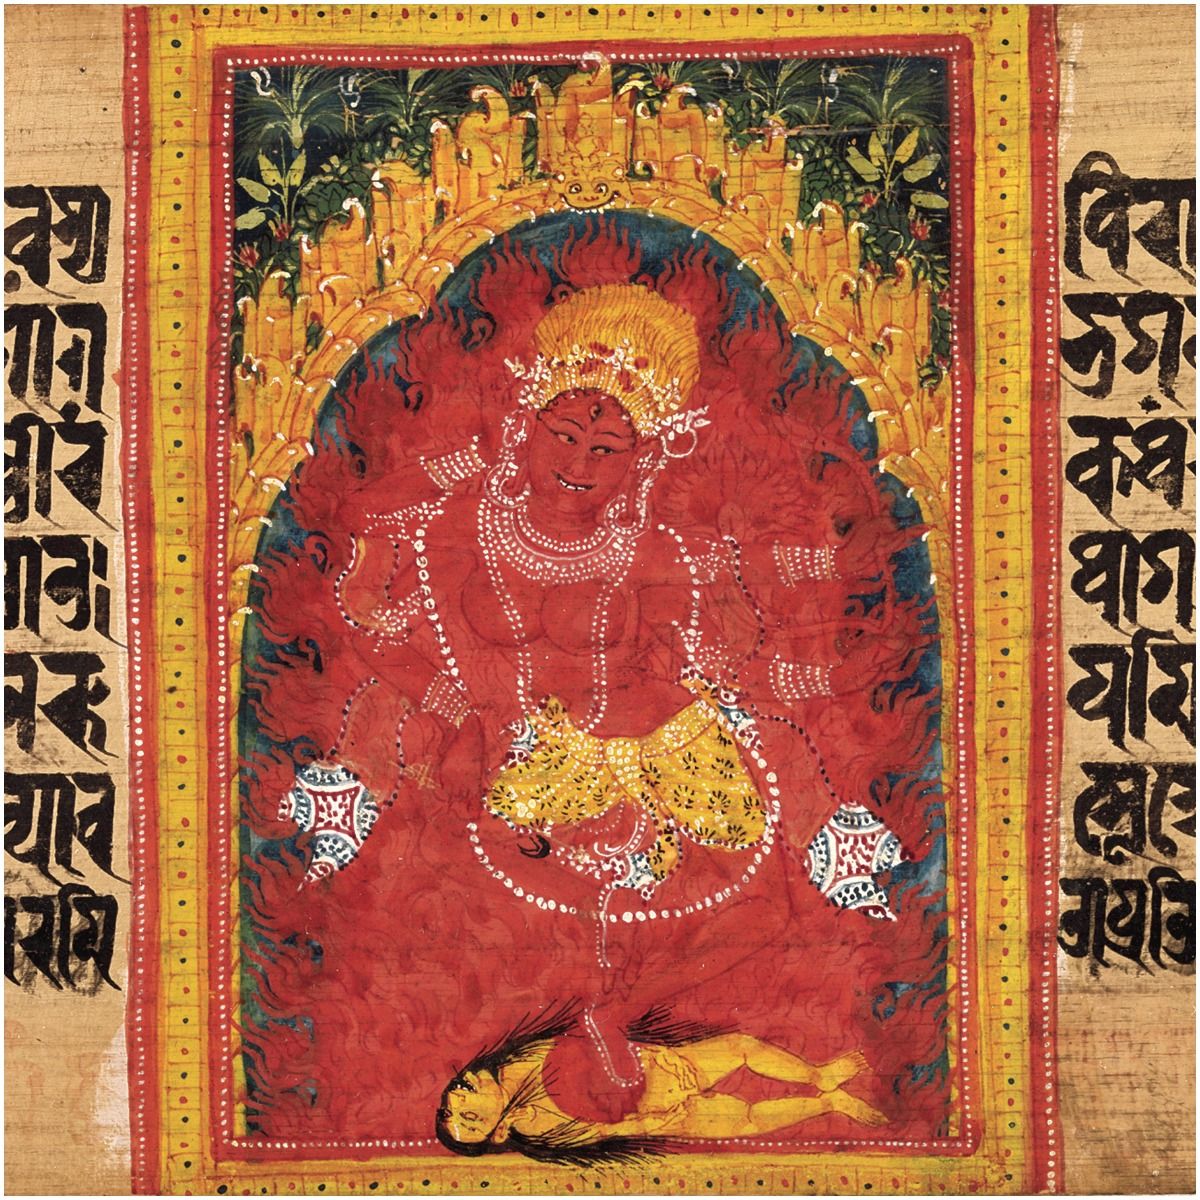 Red Tara Mantra Benefits & Meaning - OM TARE TAM SOHA